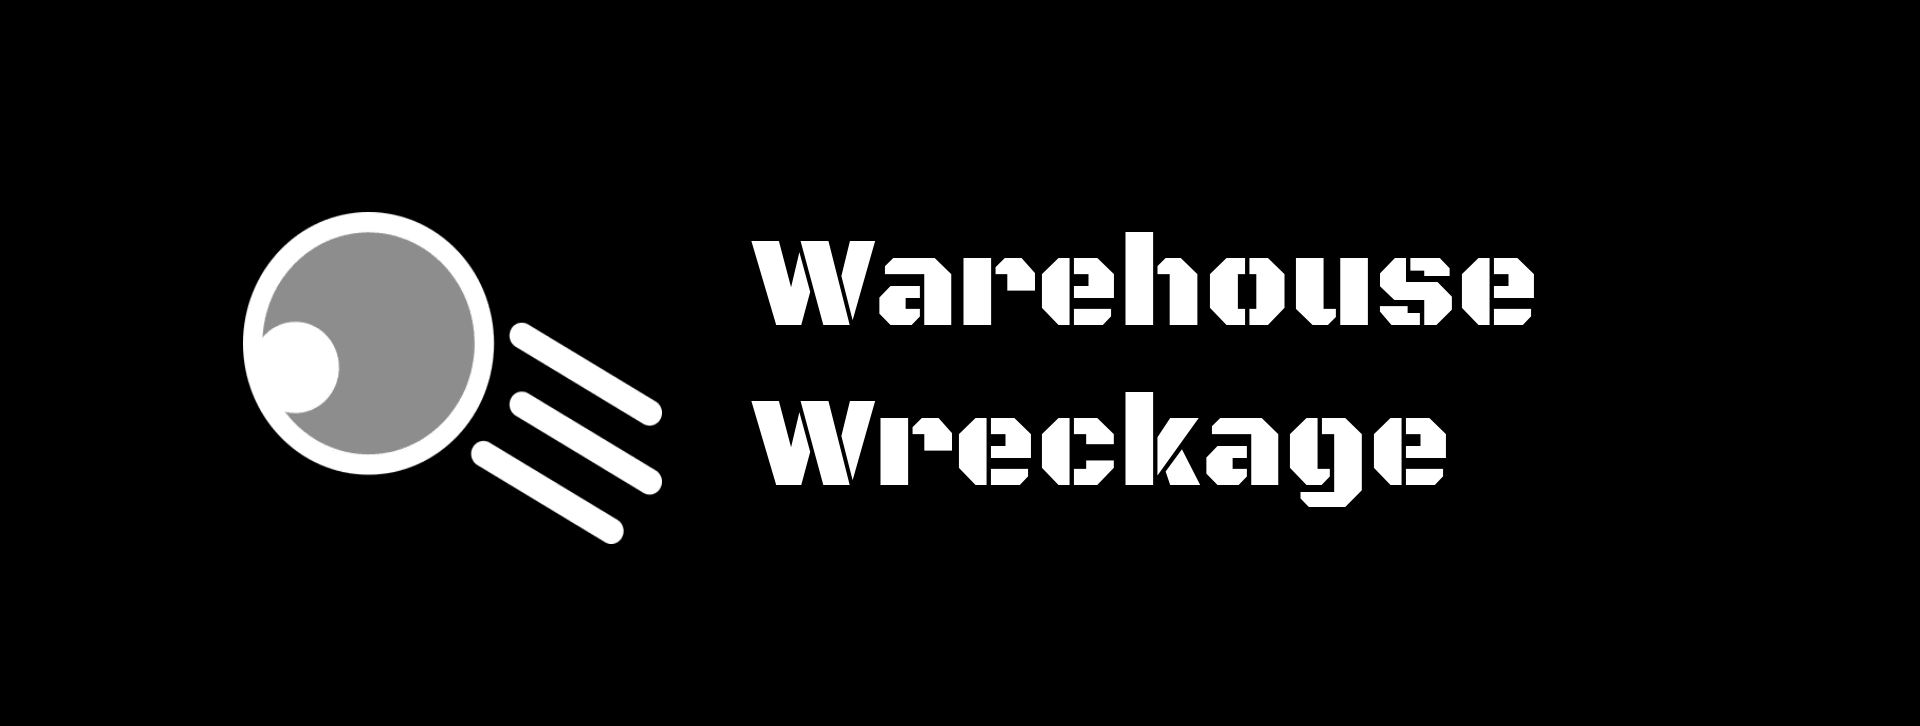 Warehouse Wreckage